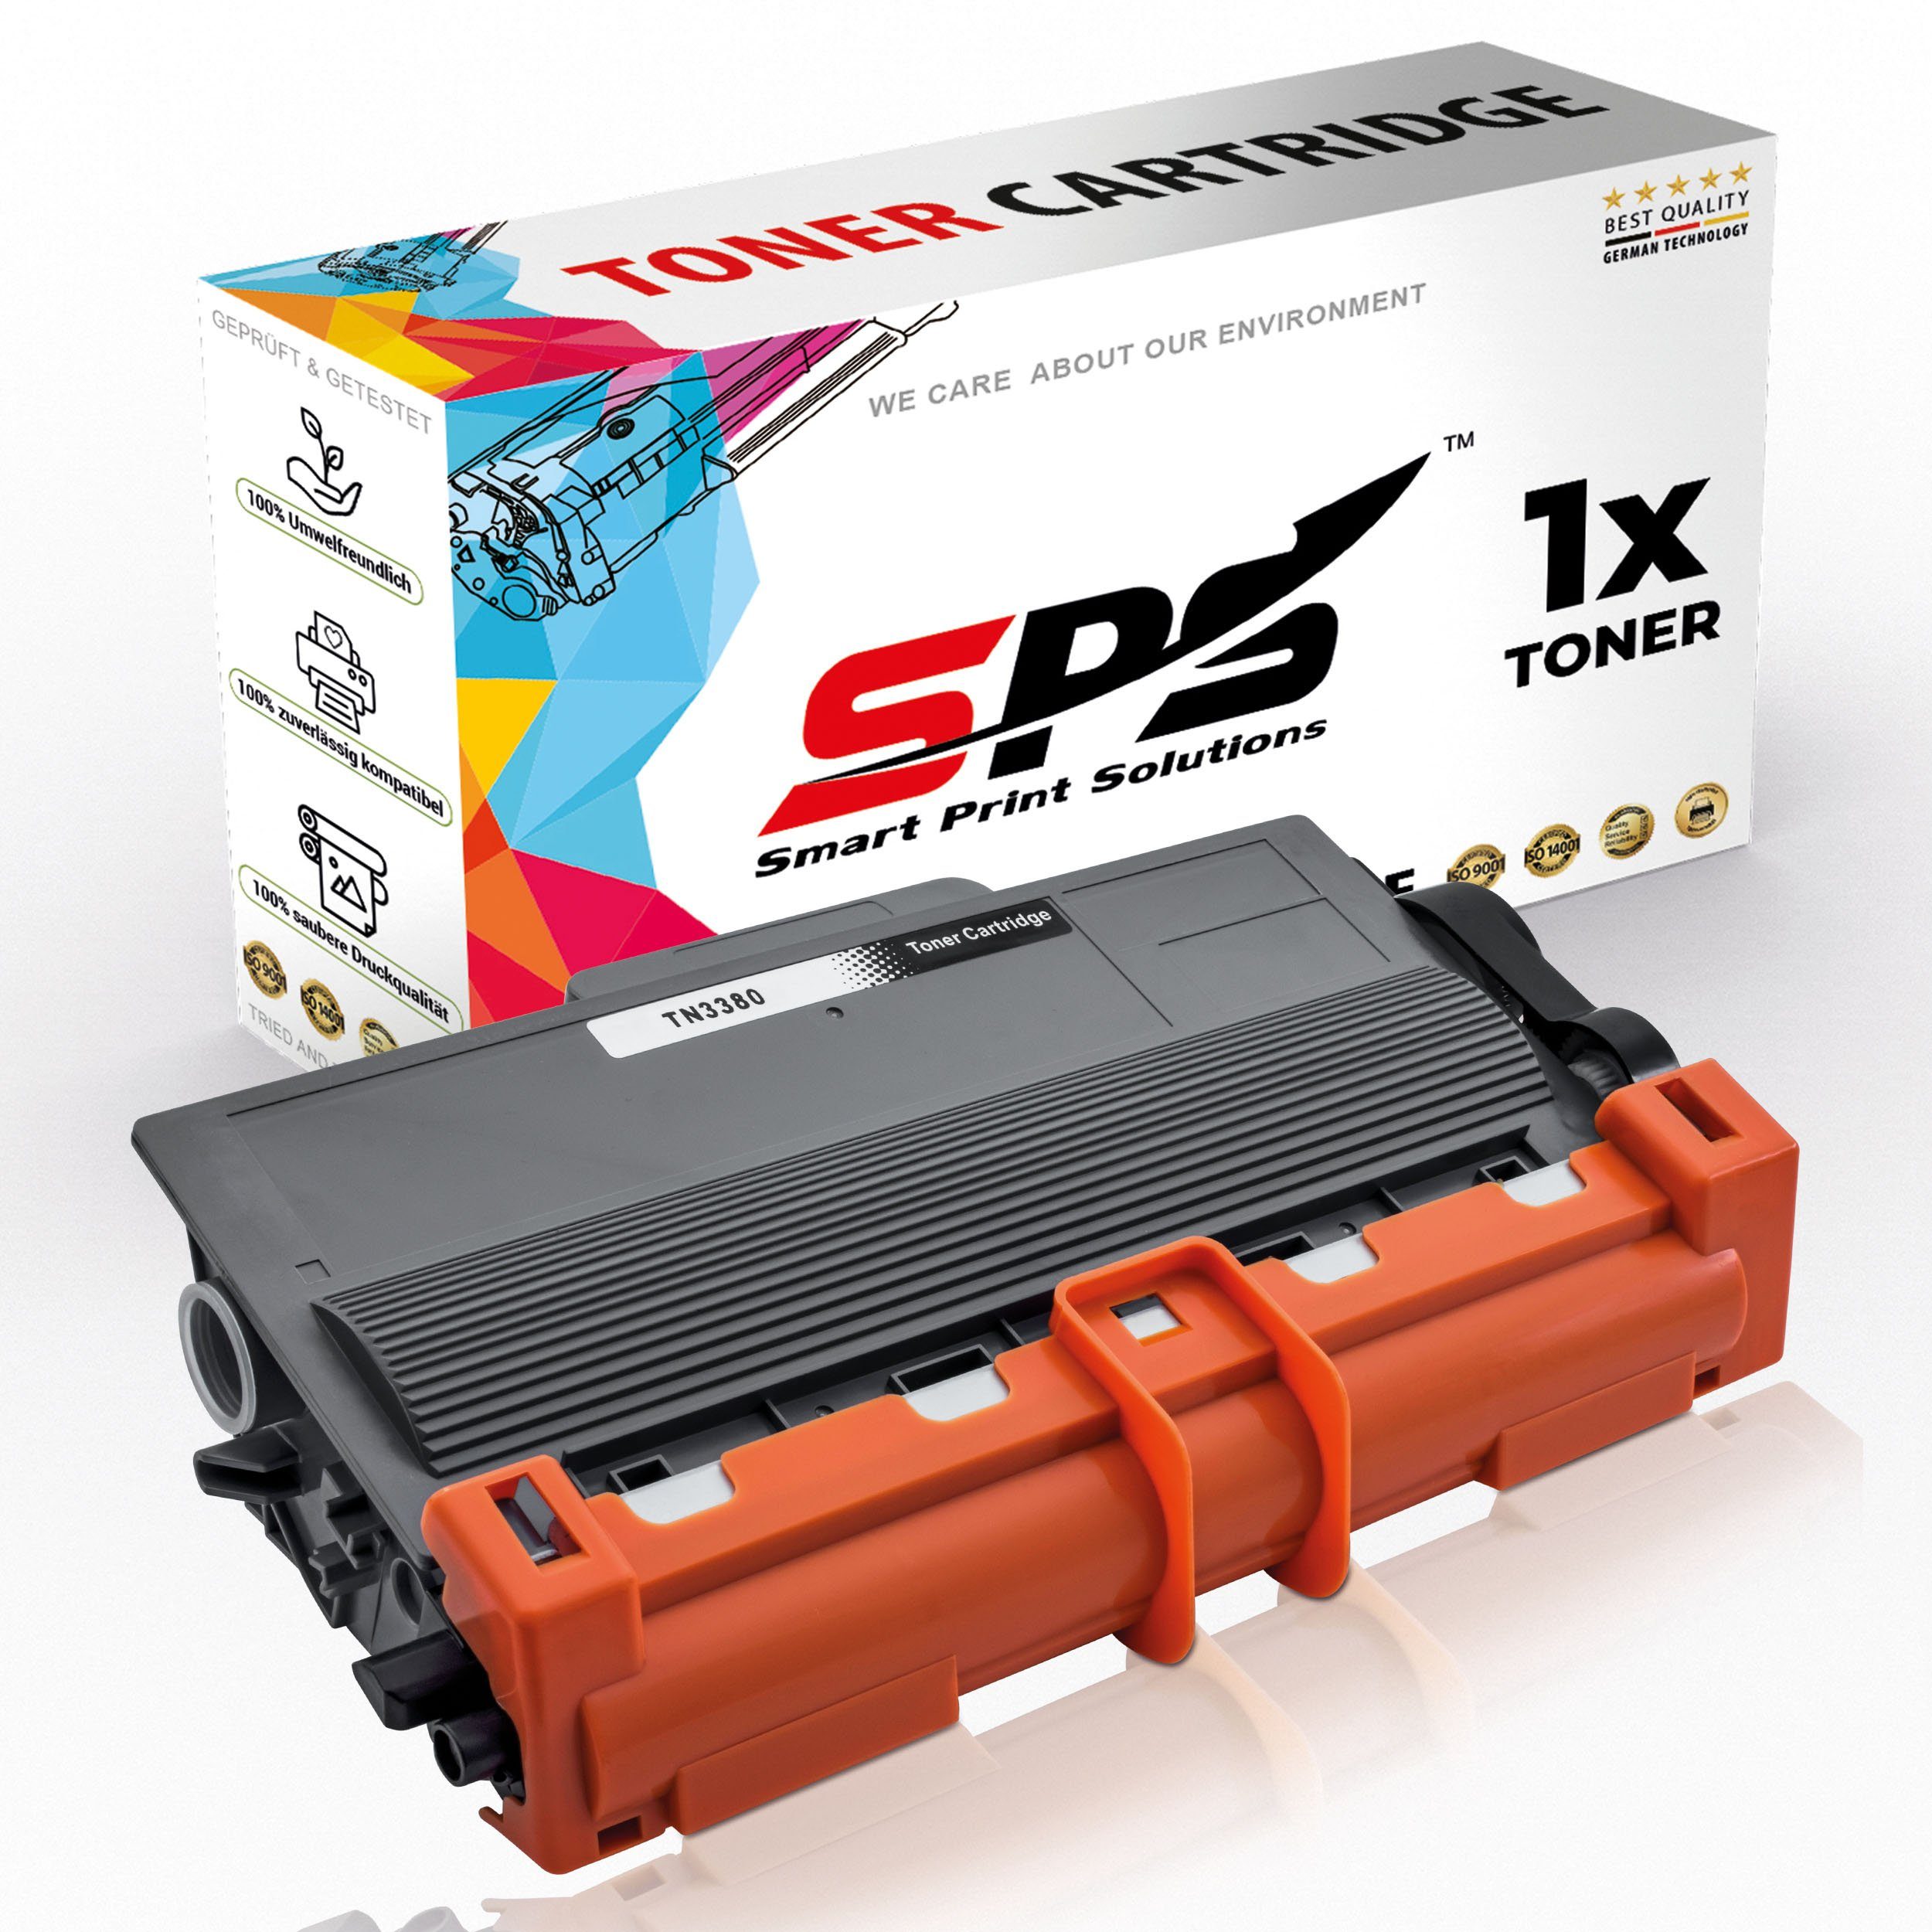 SPS Tonerkartusche Kompatibel für Brother HL-6100 TN-3380, Pack) (1er